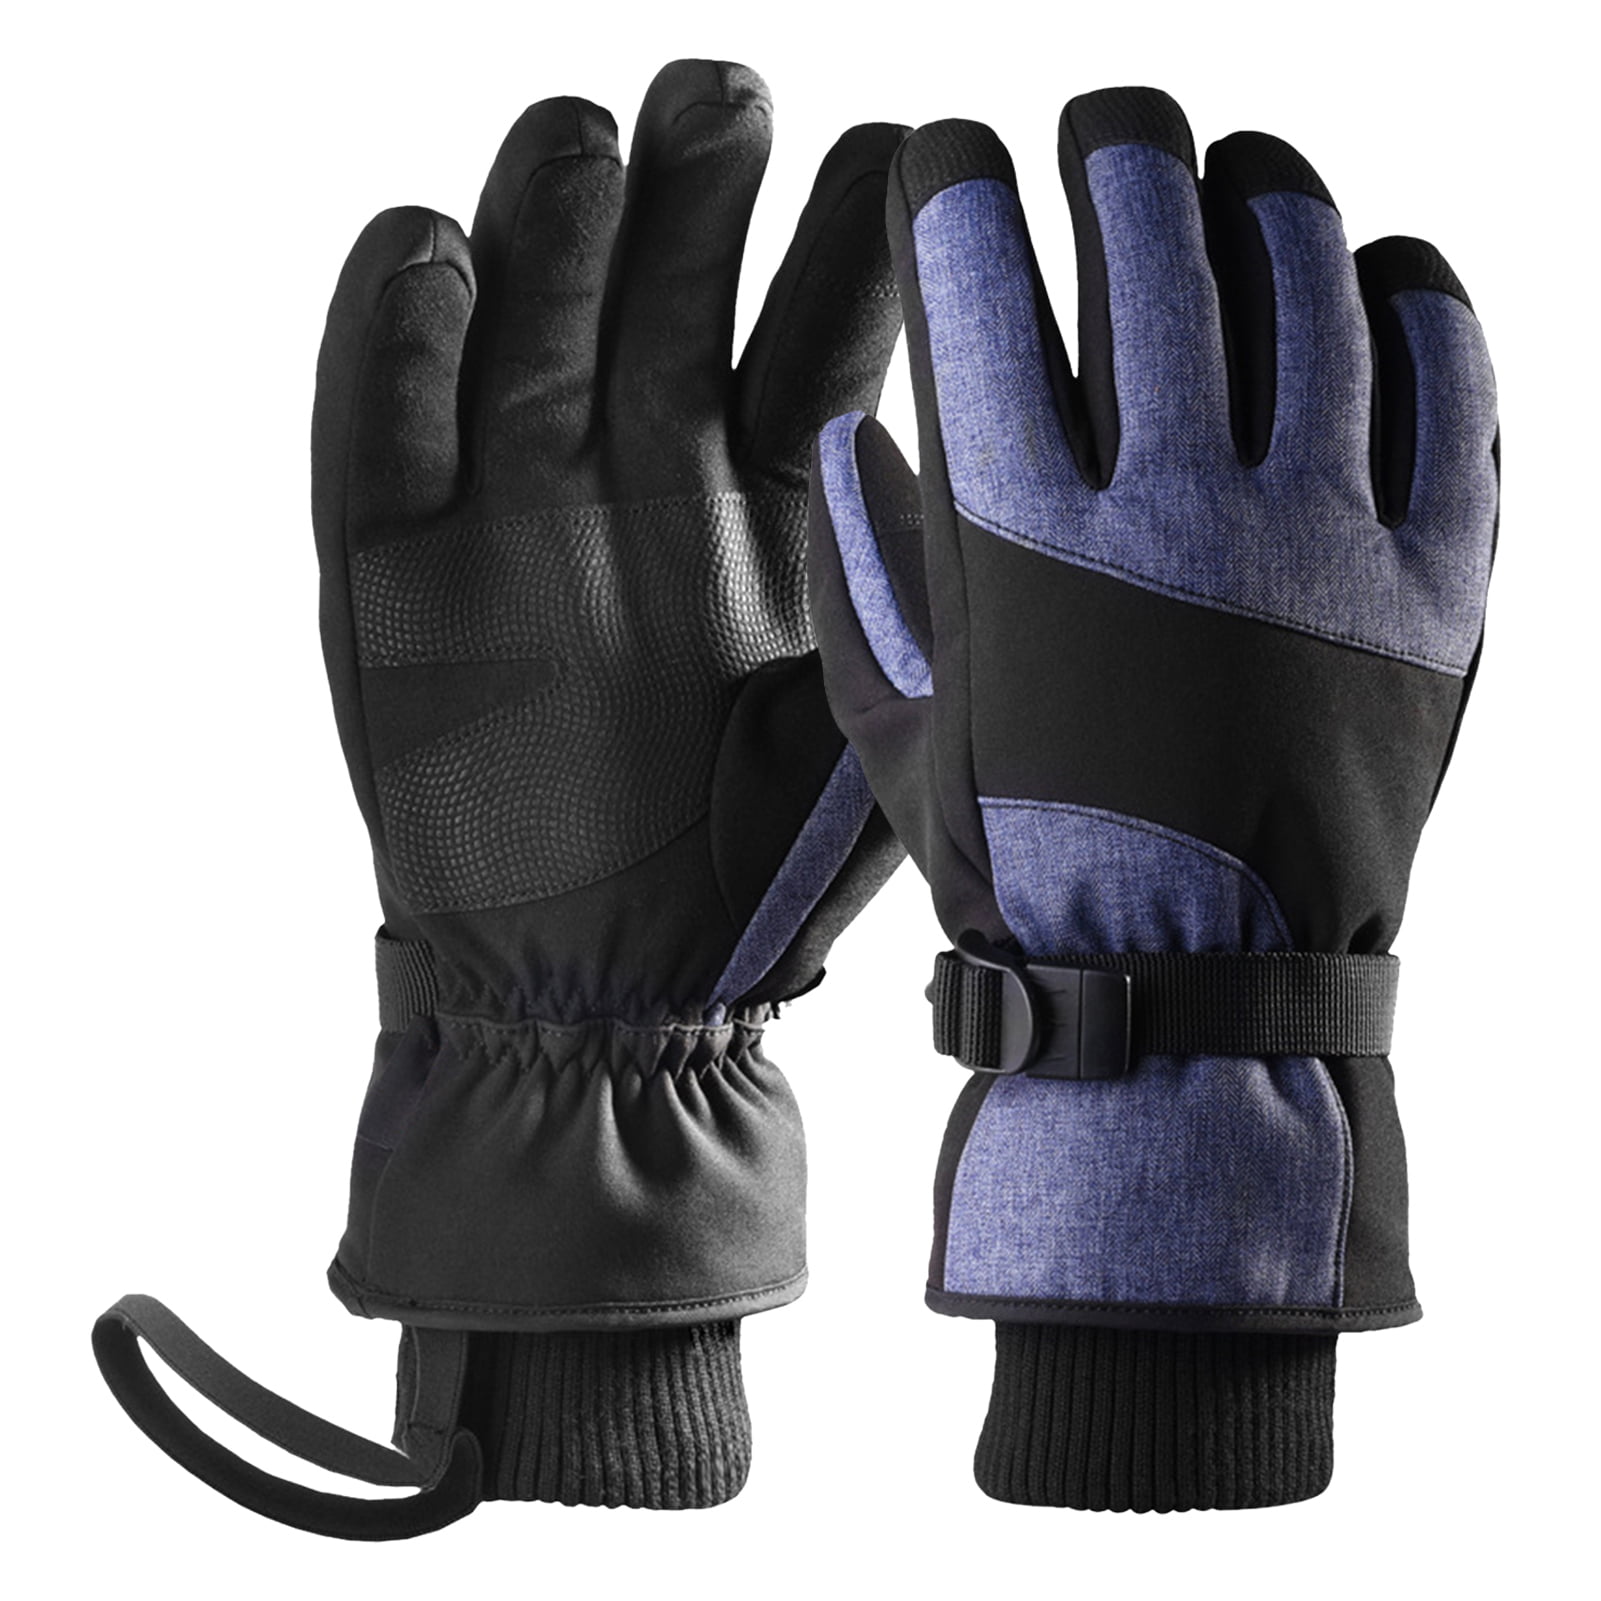 Details about   Kids Winter Snow Mittens Waterproof Warm Ski Gloves Unisex Gloves for Cold